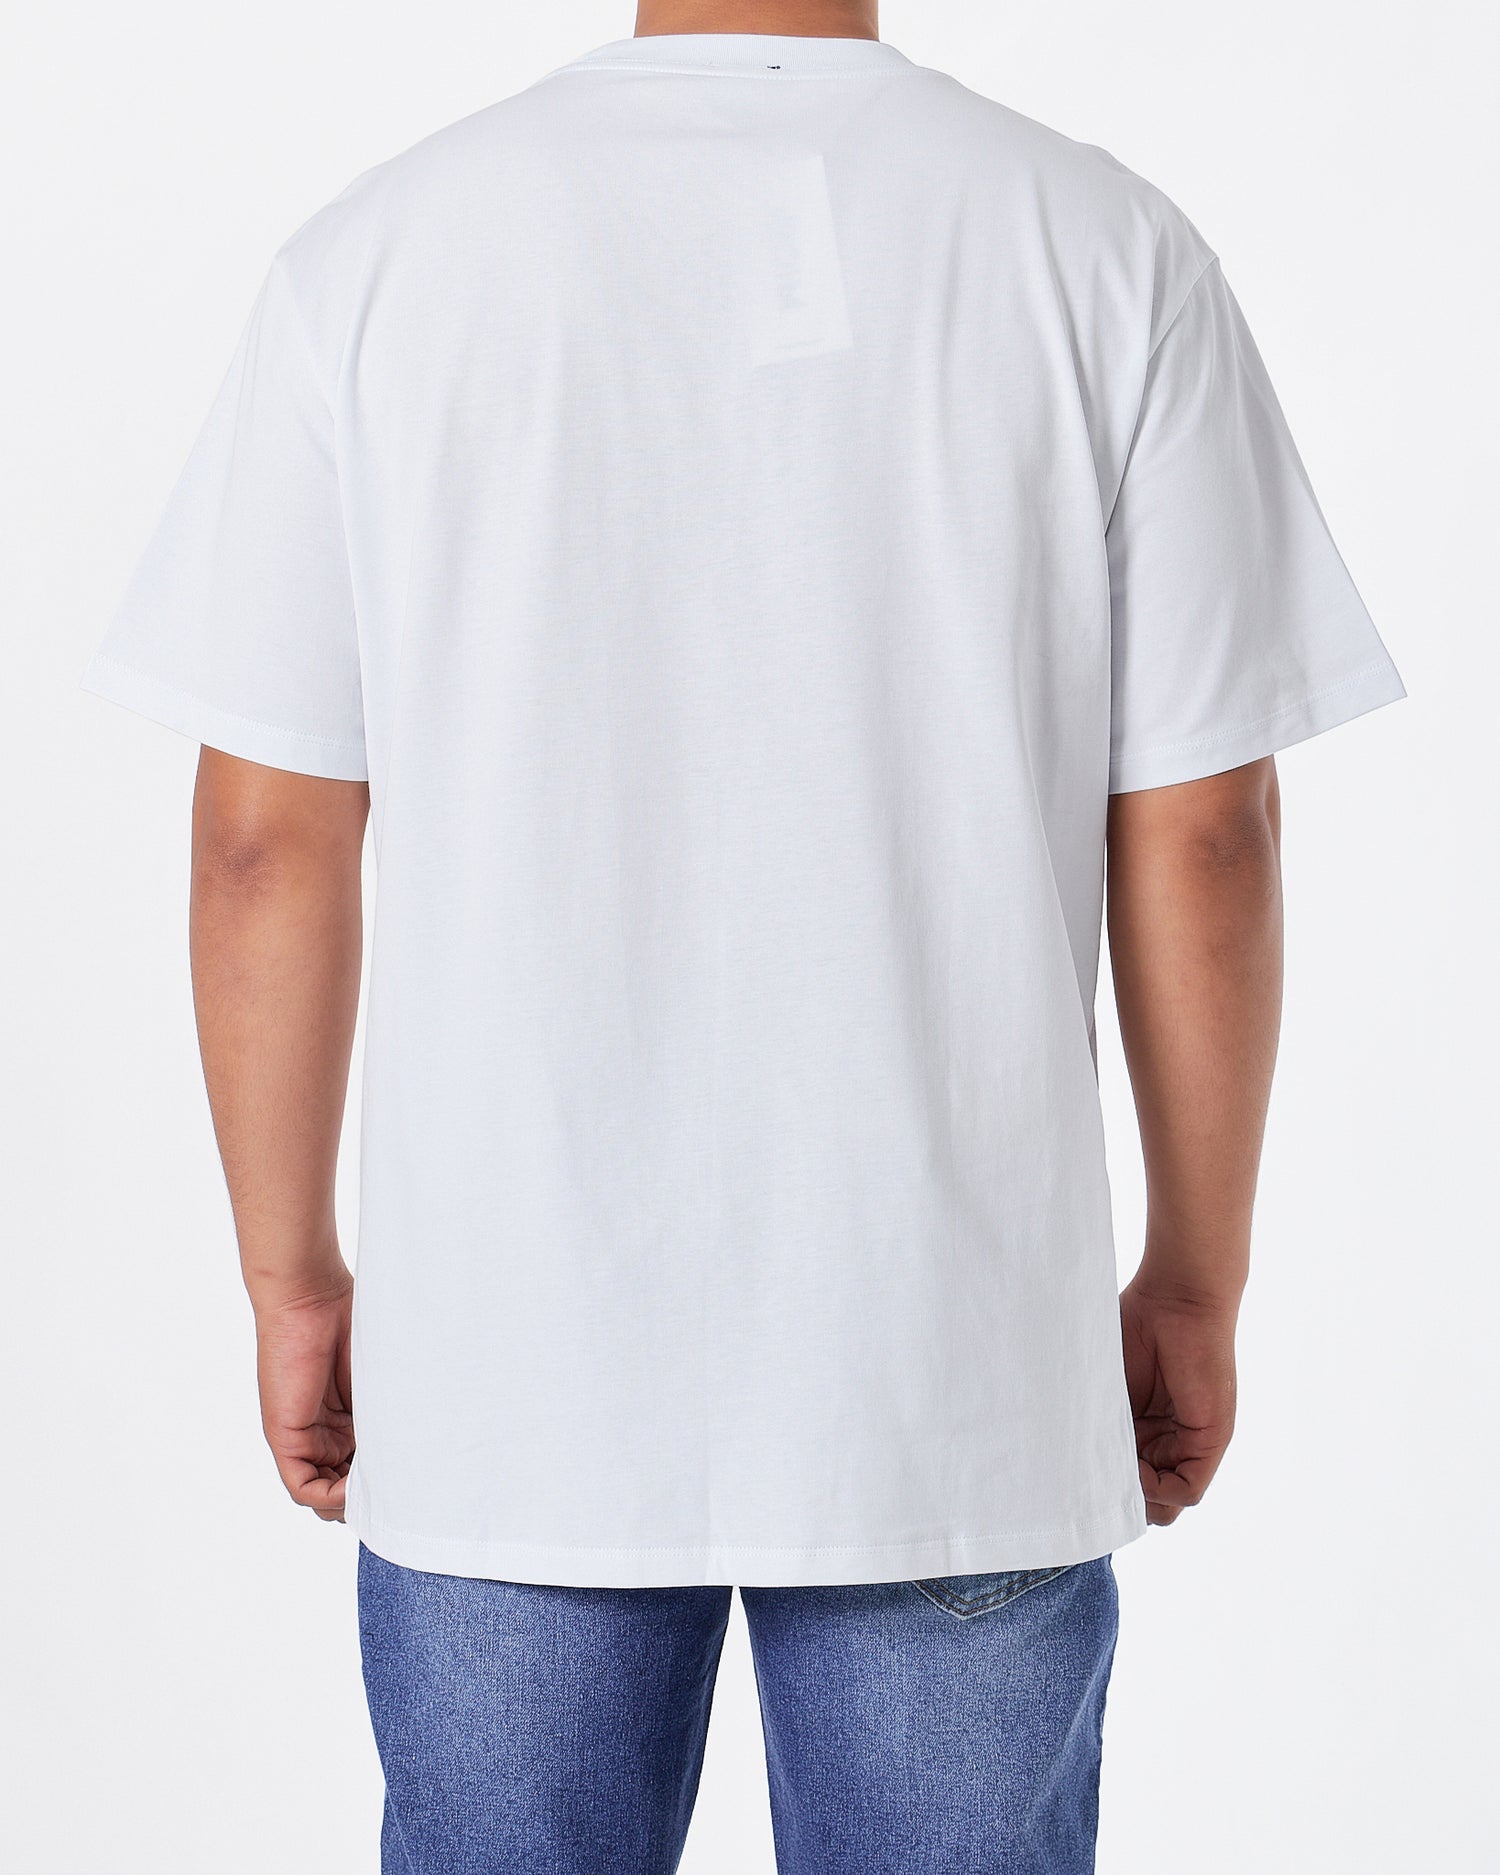 FEN Doggy Printed Men White T-Shirt 21.50